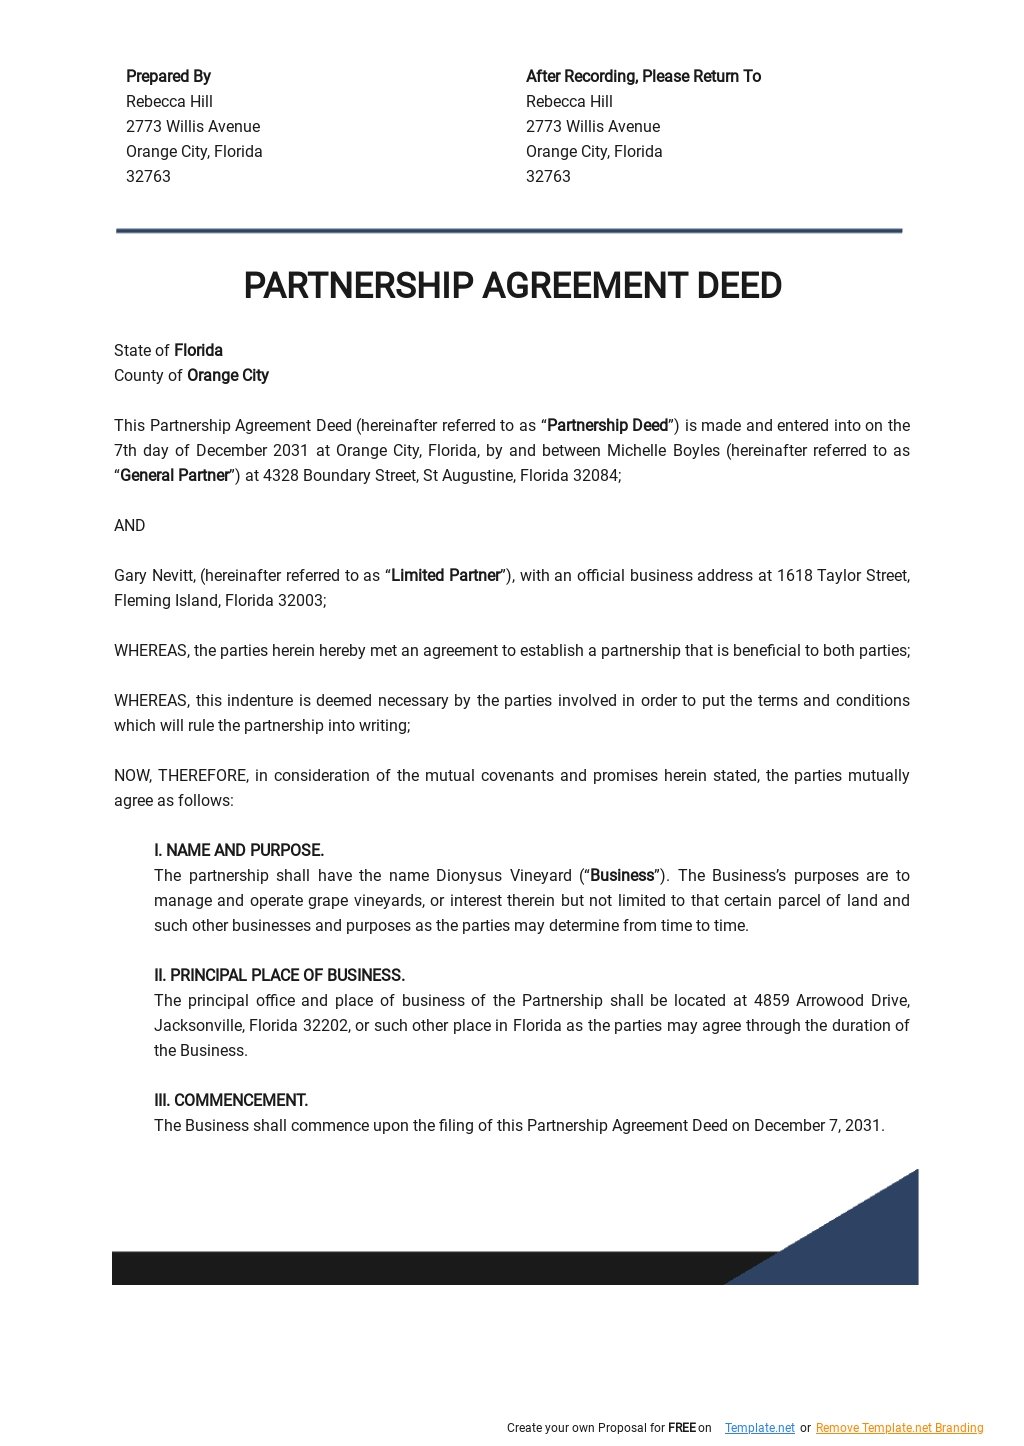 Partnership Agreement Deed Template